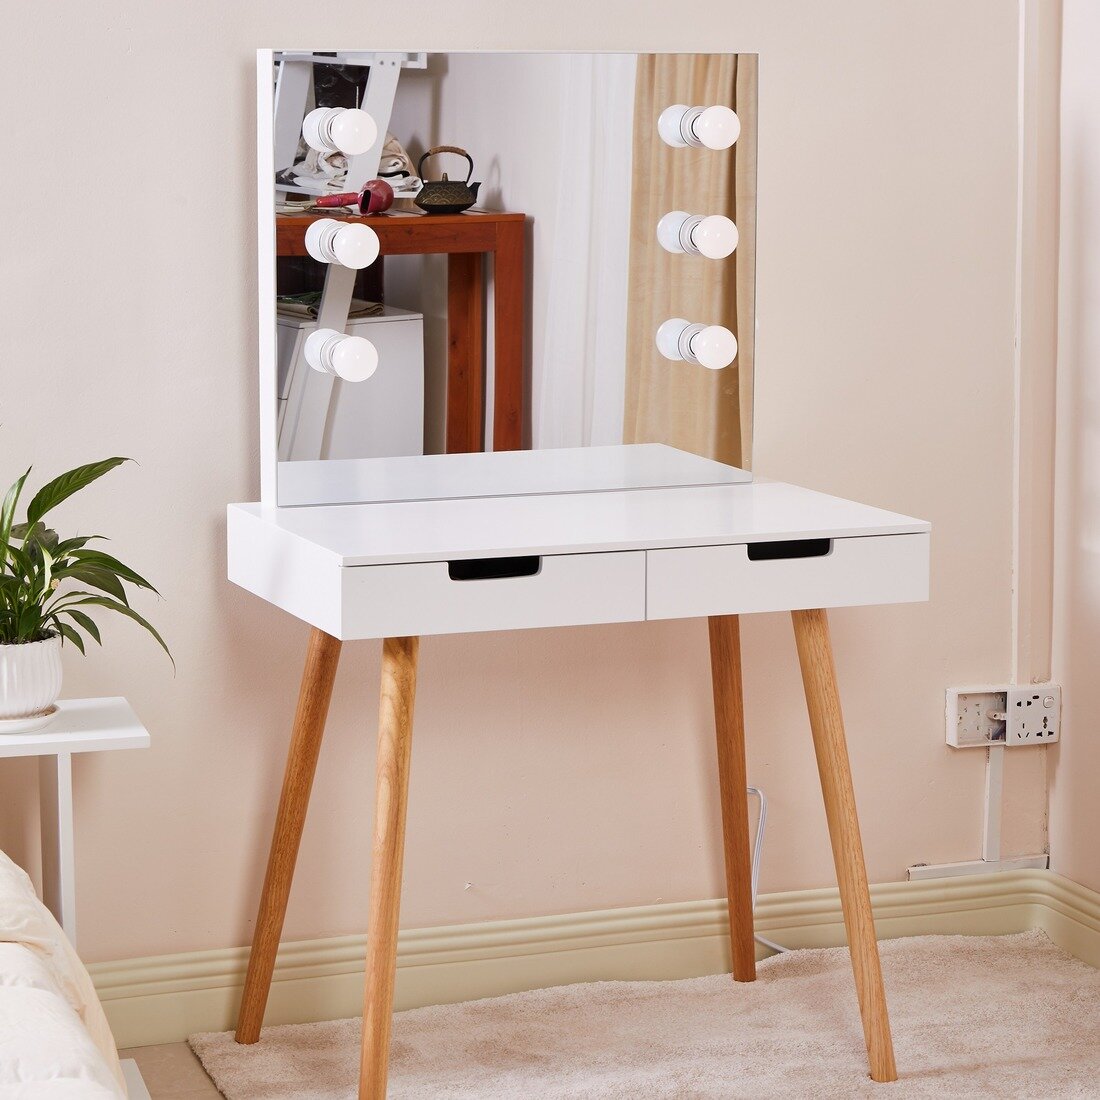 Details about   Elegant Vanity Table Makeup Mirror Set Stool Chair Bedroom Decor Wood Furniture 